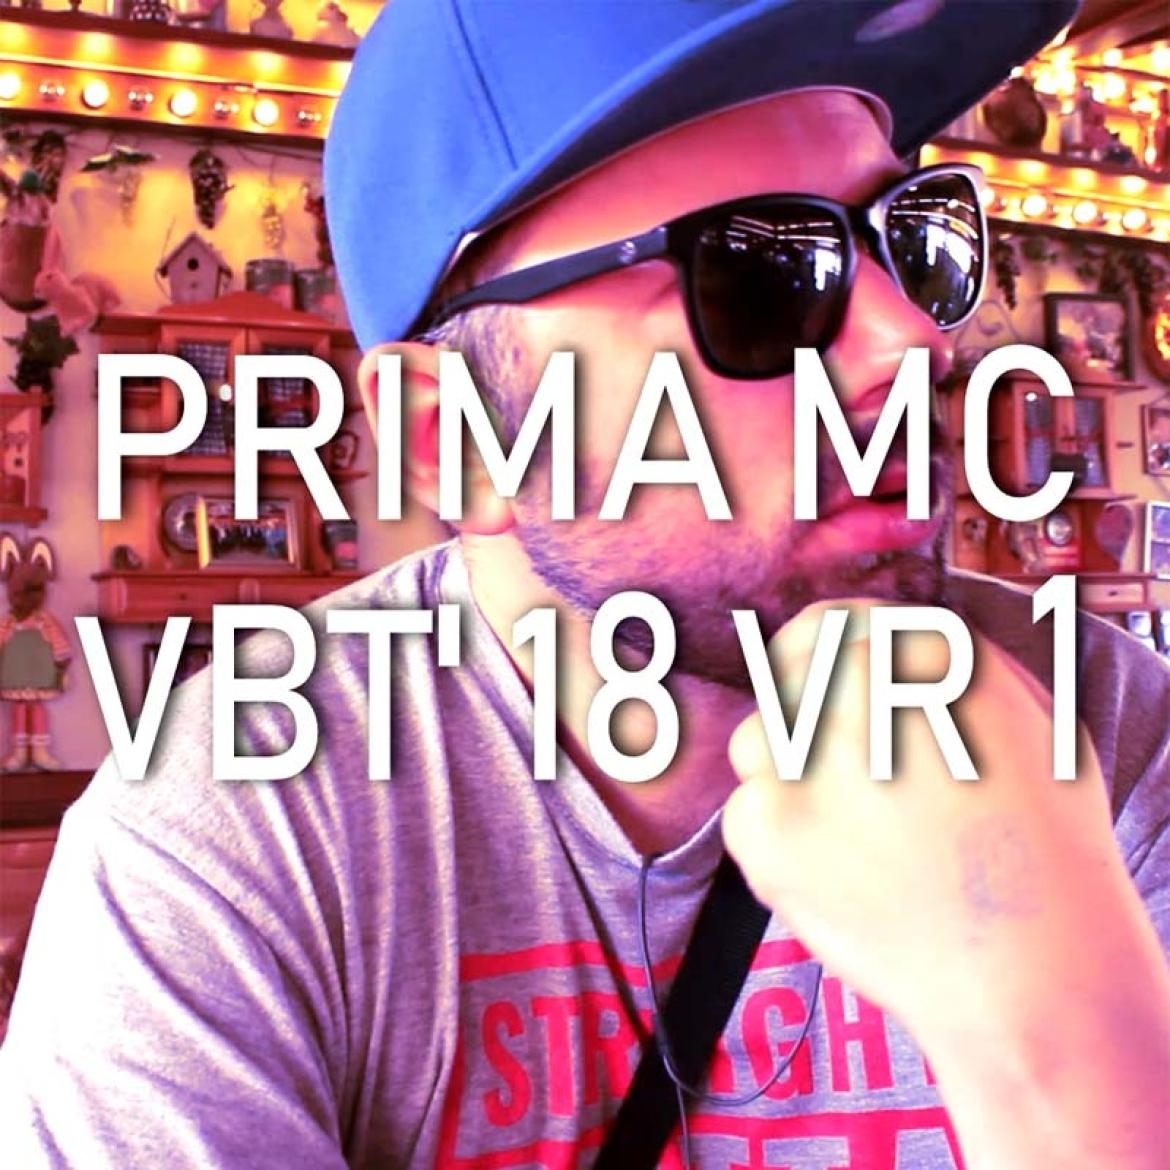 VBT VR 1 - PRIMA MC